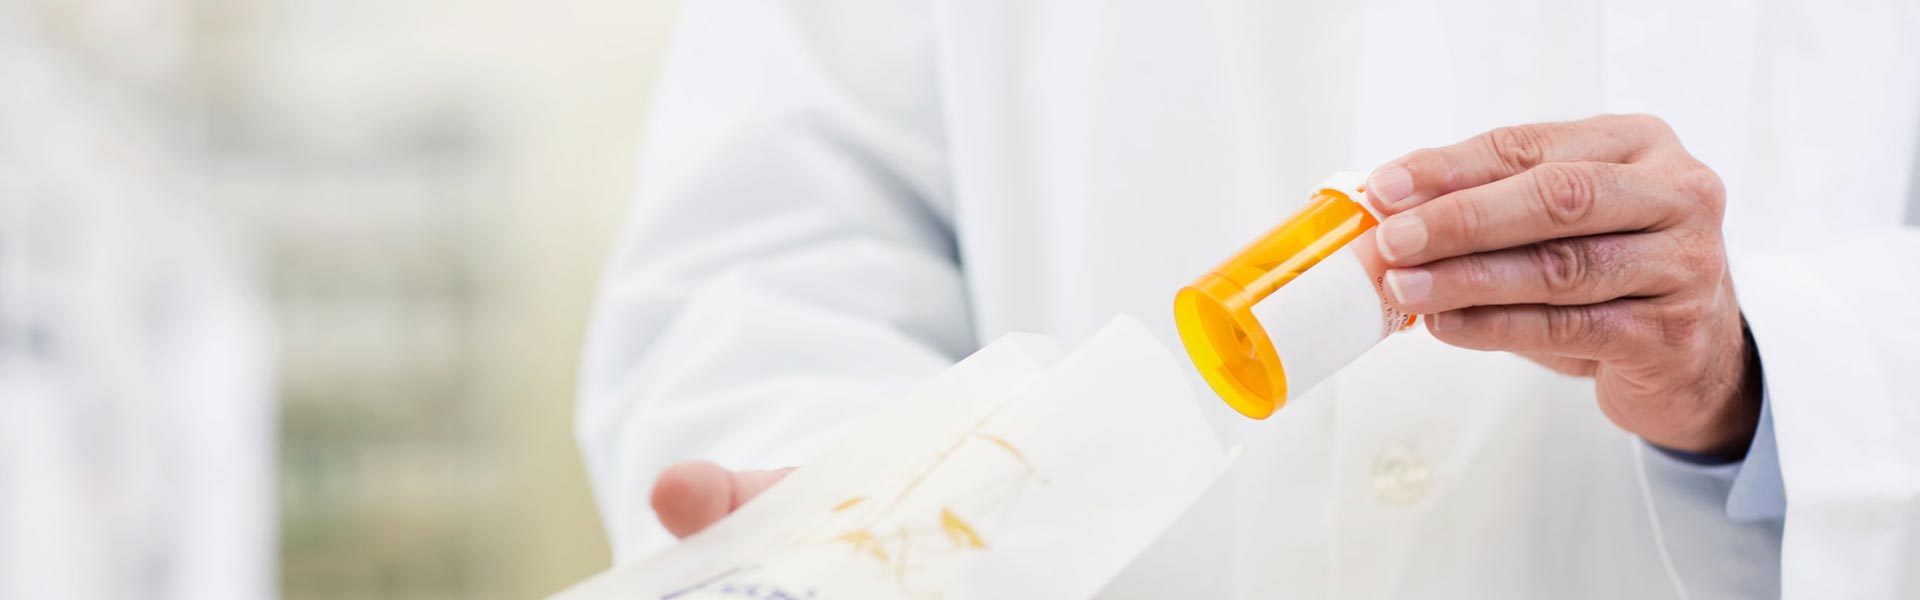 SAP and Chronicled Announce Blockchain Solution to Verify Prescription Drug Authenticity